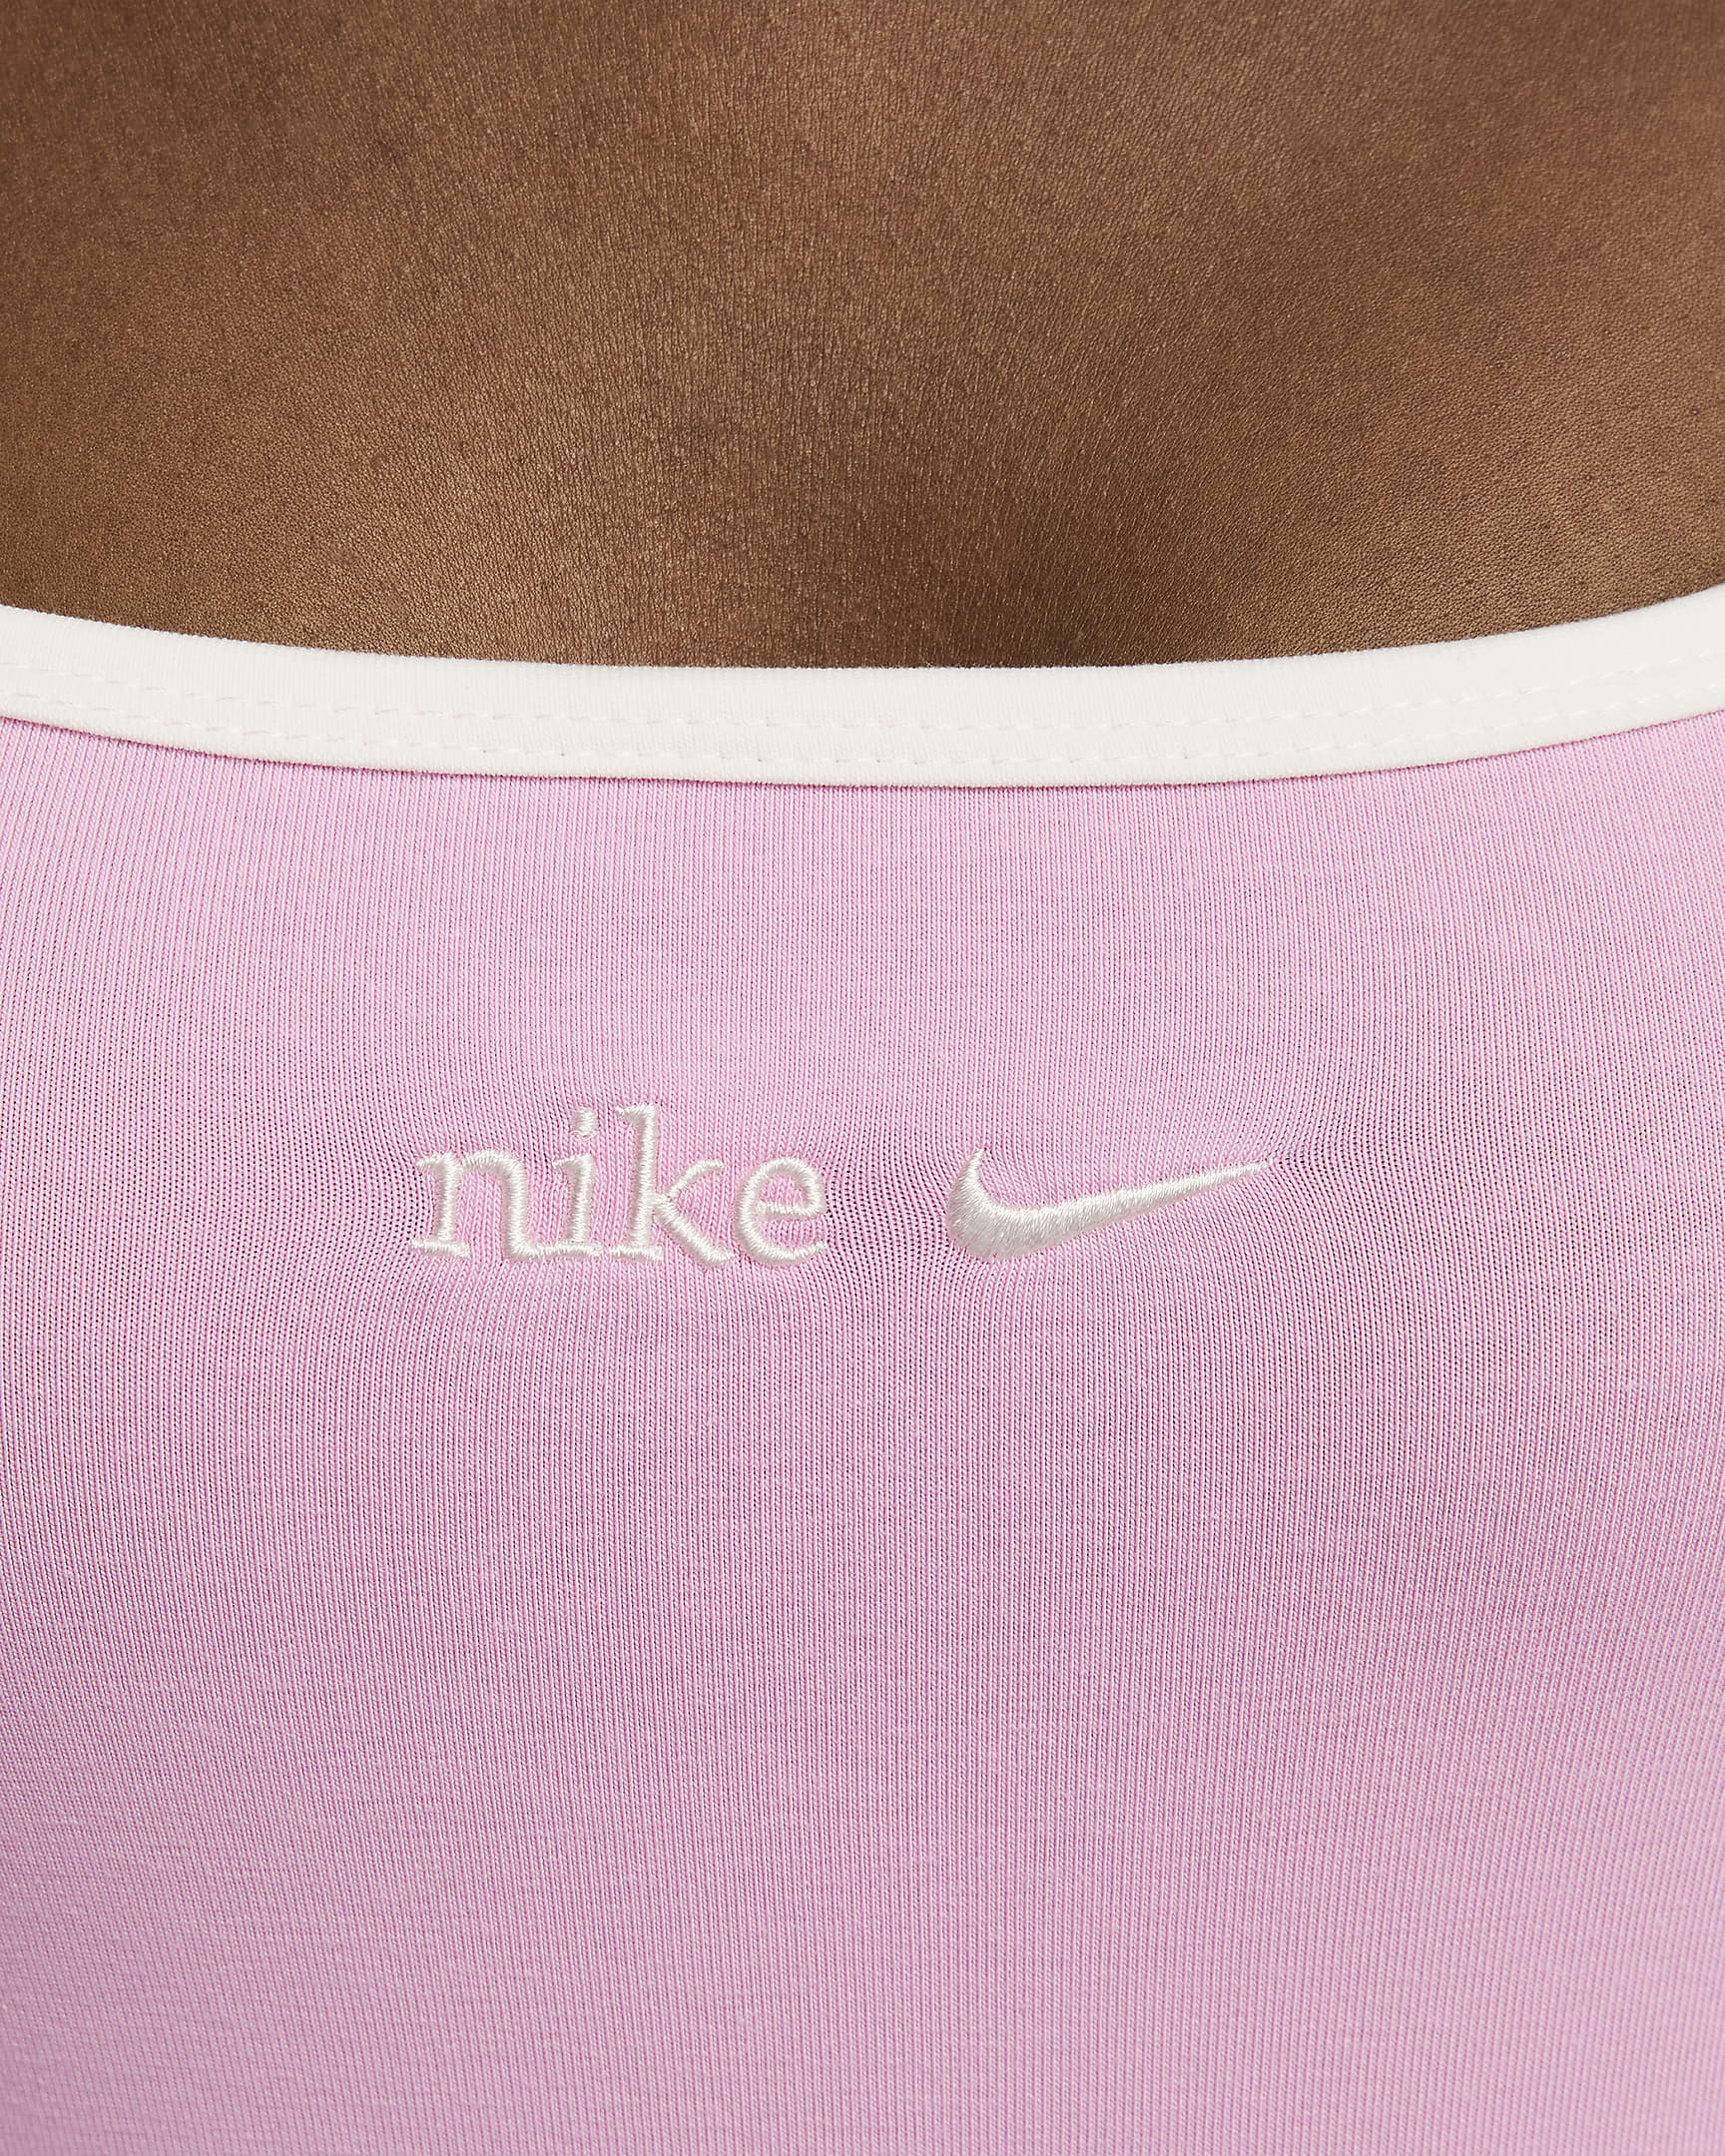 Nike Sportswear Women's Square-Neck Long-Sleeve Top. Nike BG